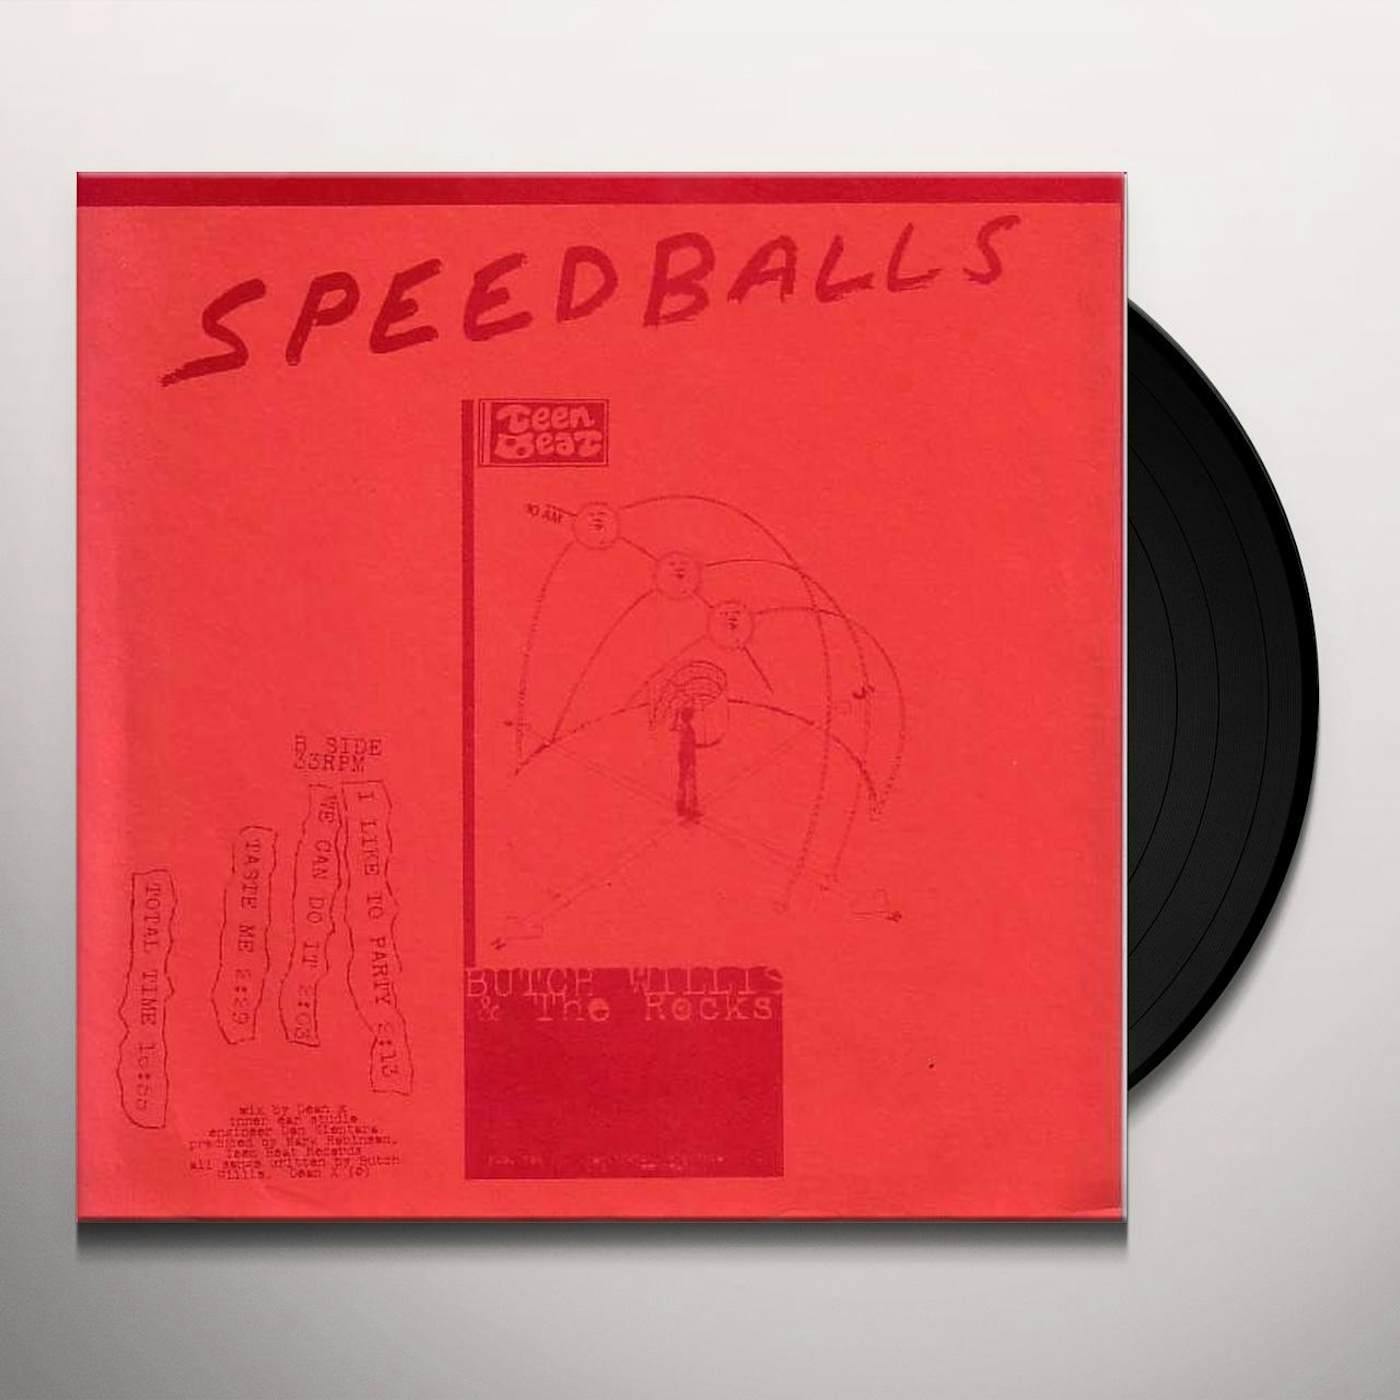 Butch Willis & The Rocks SPEEDBALLS Vinyl Record